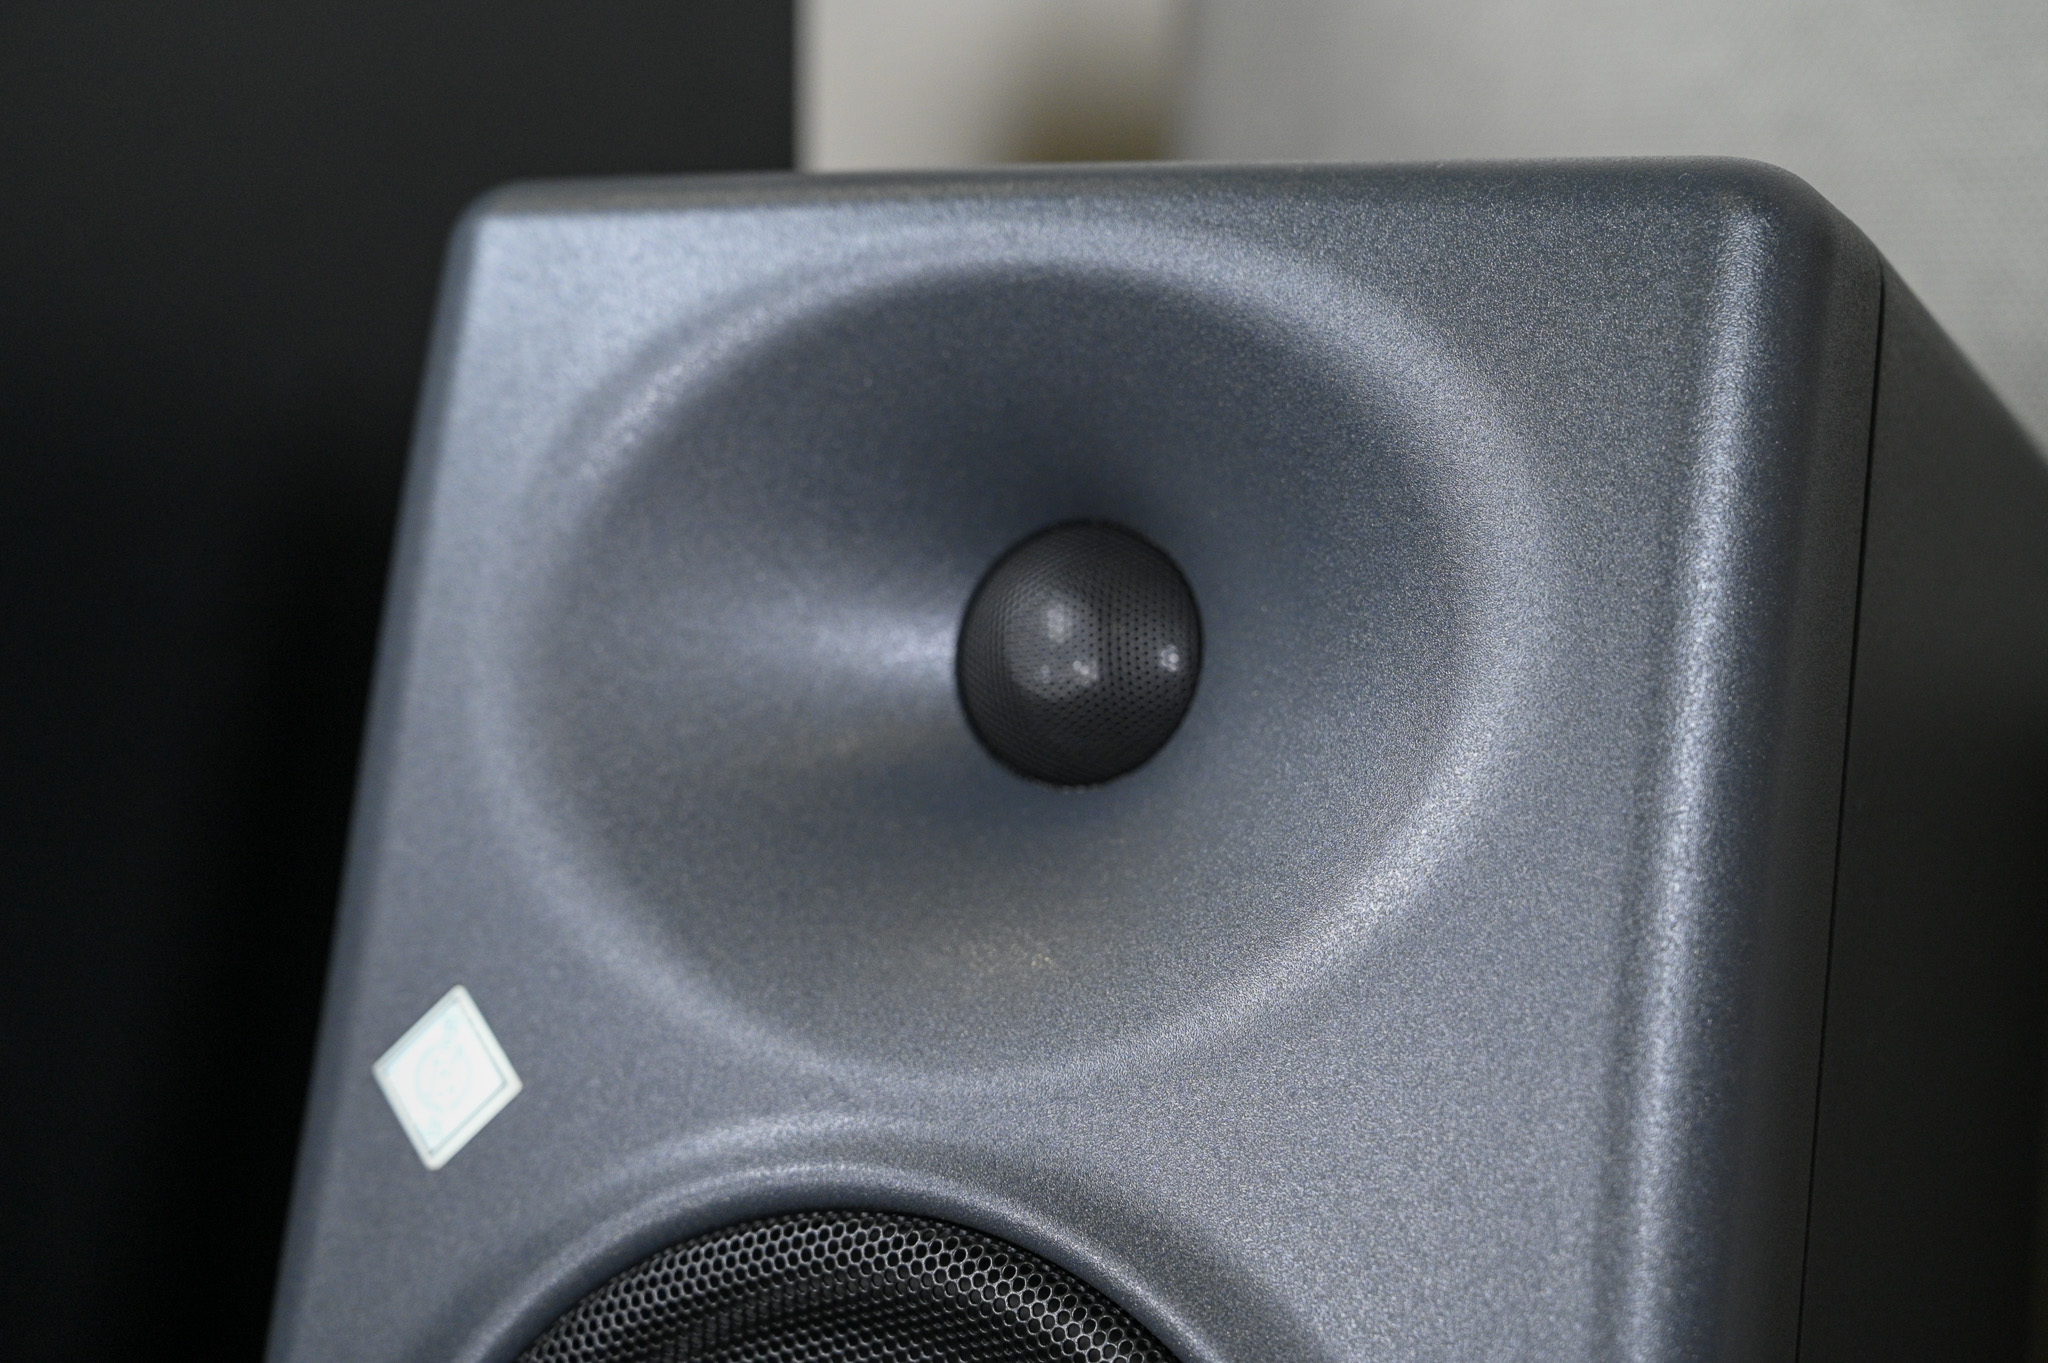 tinhte-neumann-kh-120-ii-mt-48-monitor-speakers-active-speakers-audio-interface (22).jpg